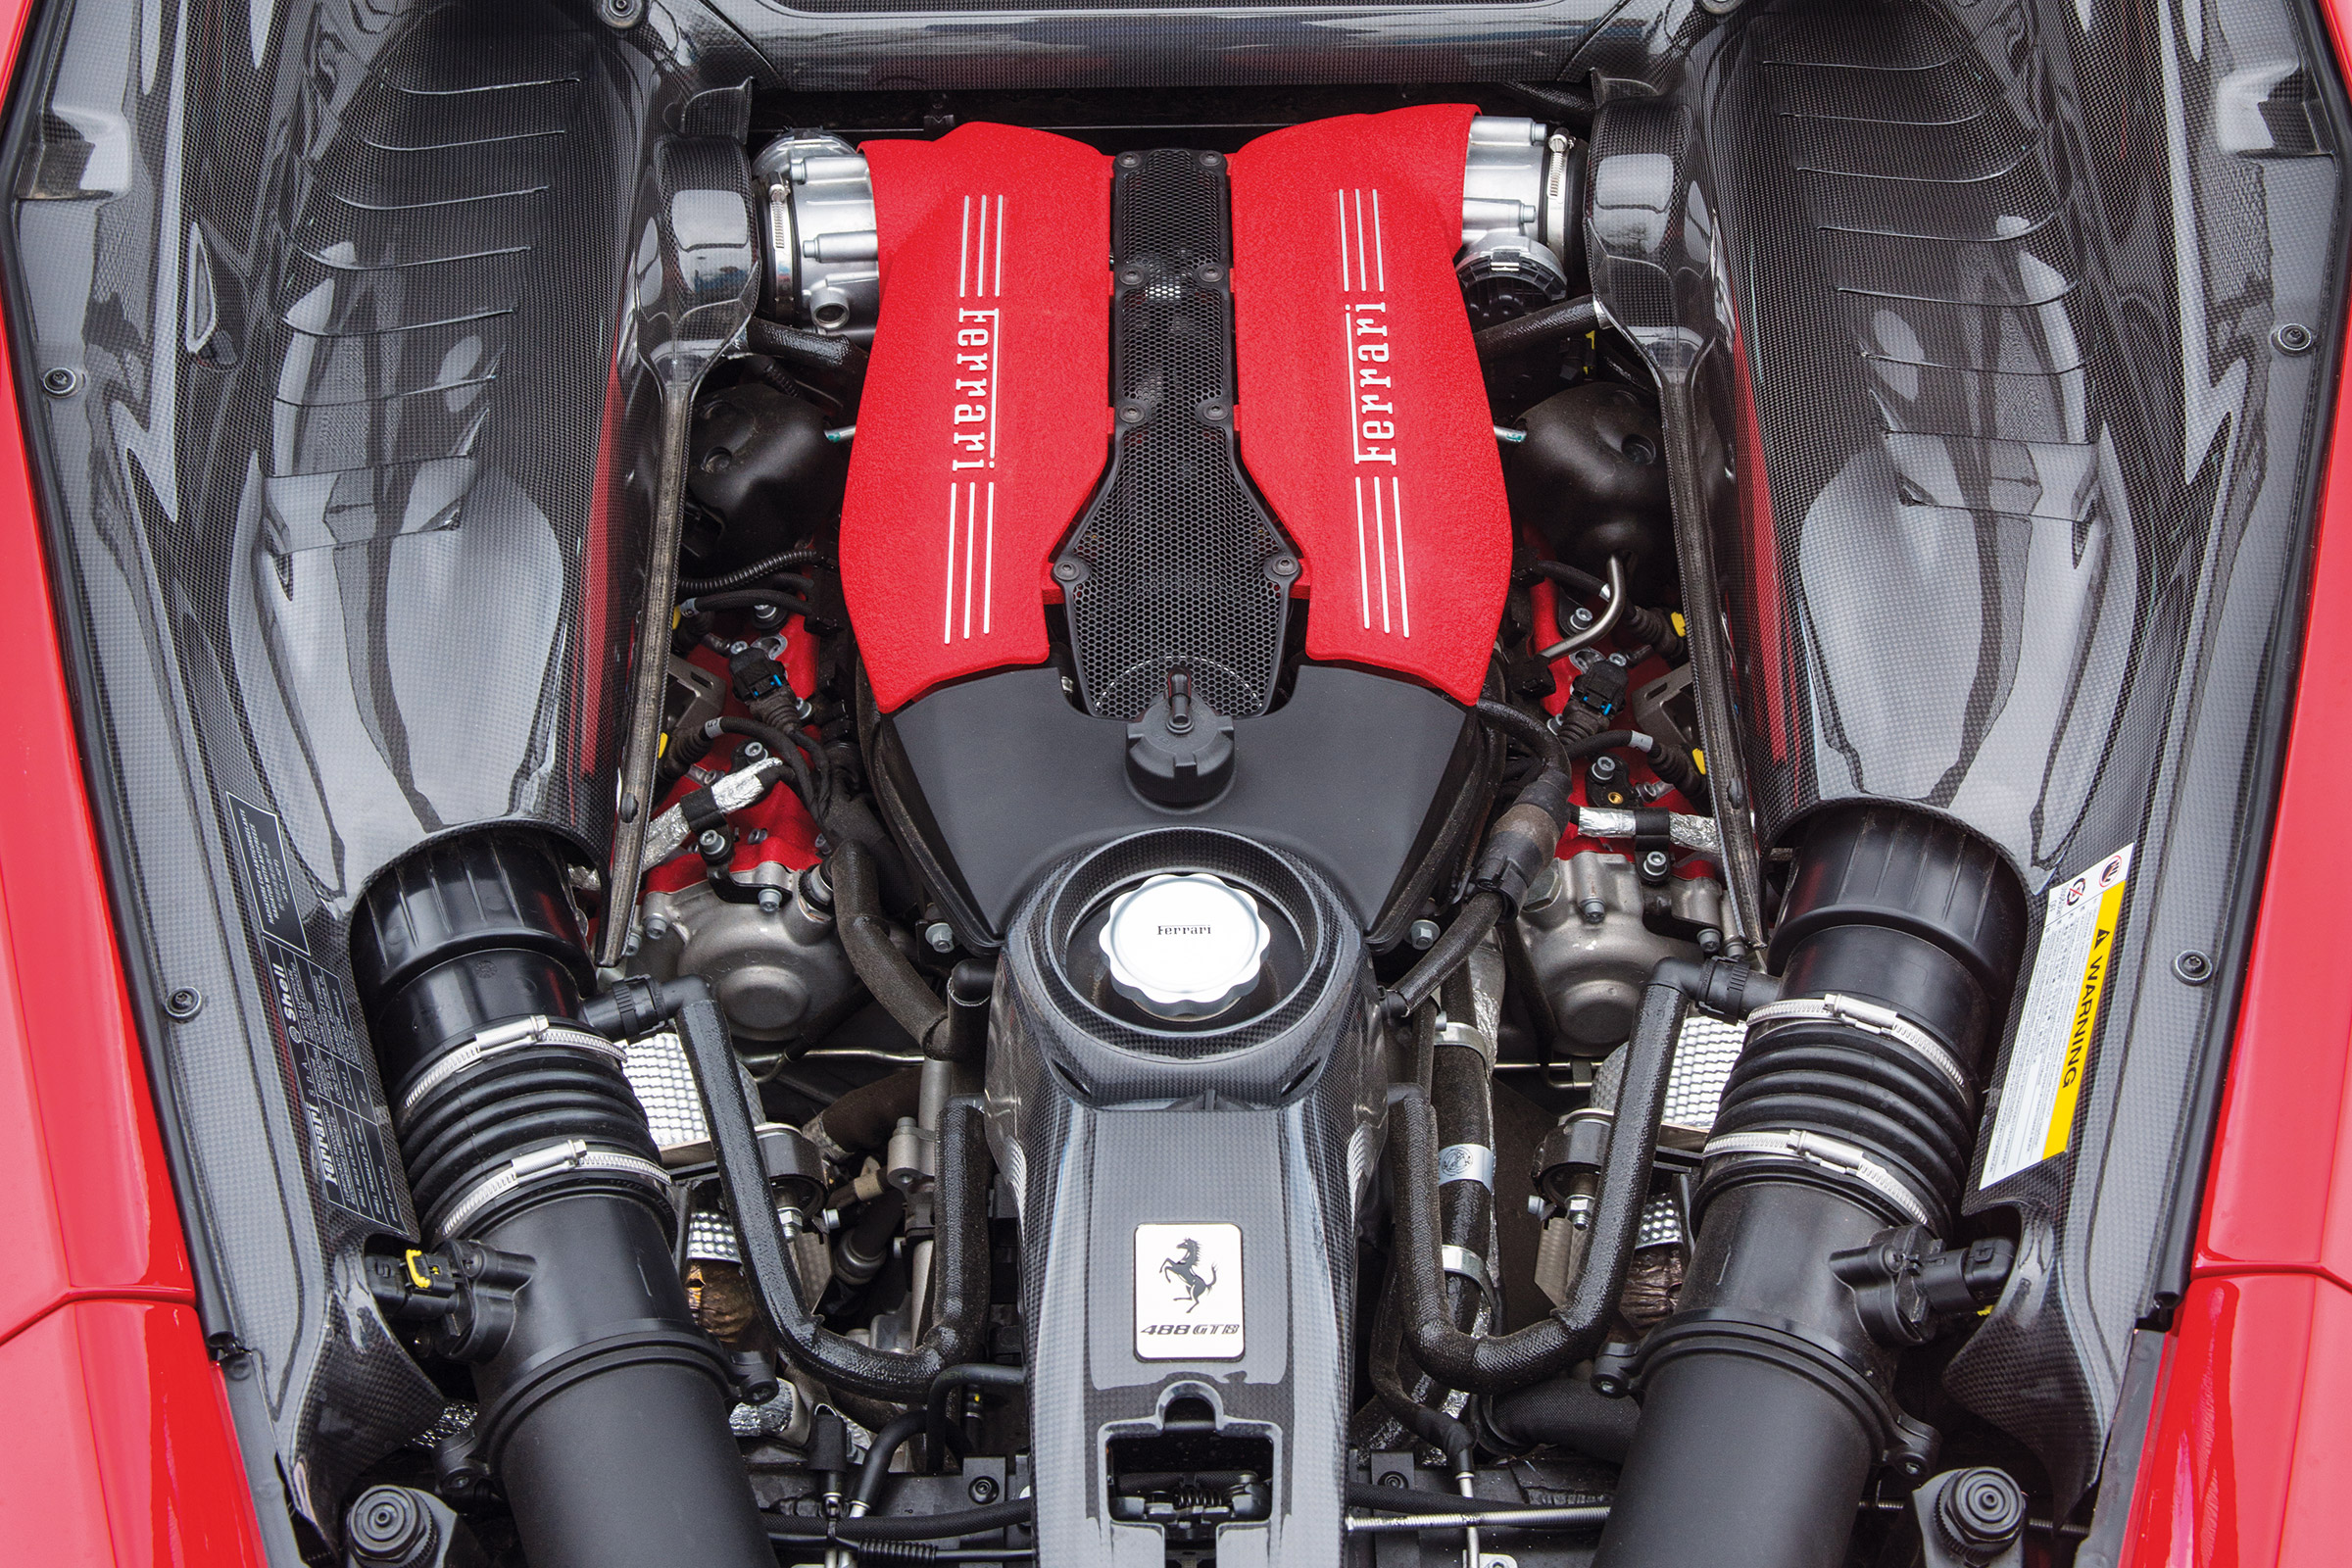 Ferrari V8 Engine Wins International Engine of the Year Award for Third Consecutive Year